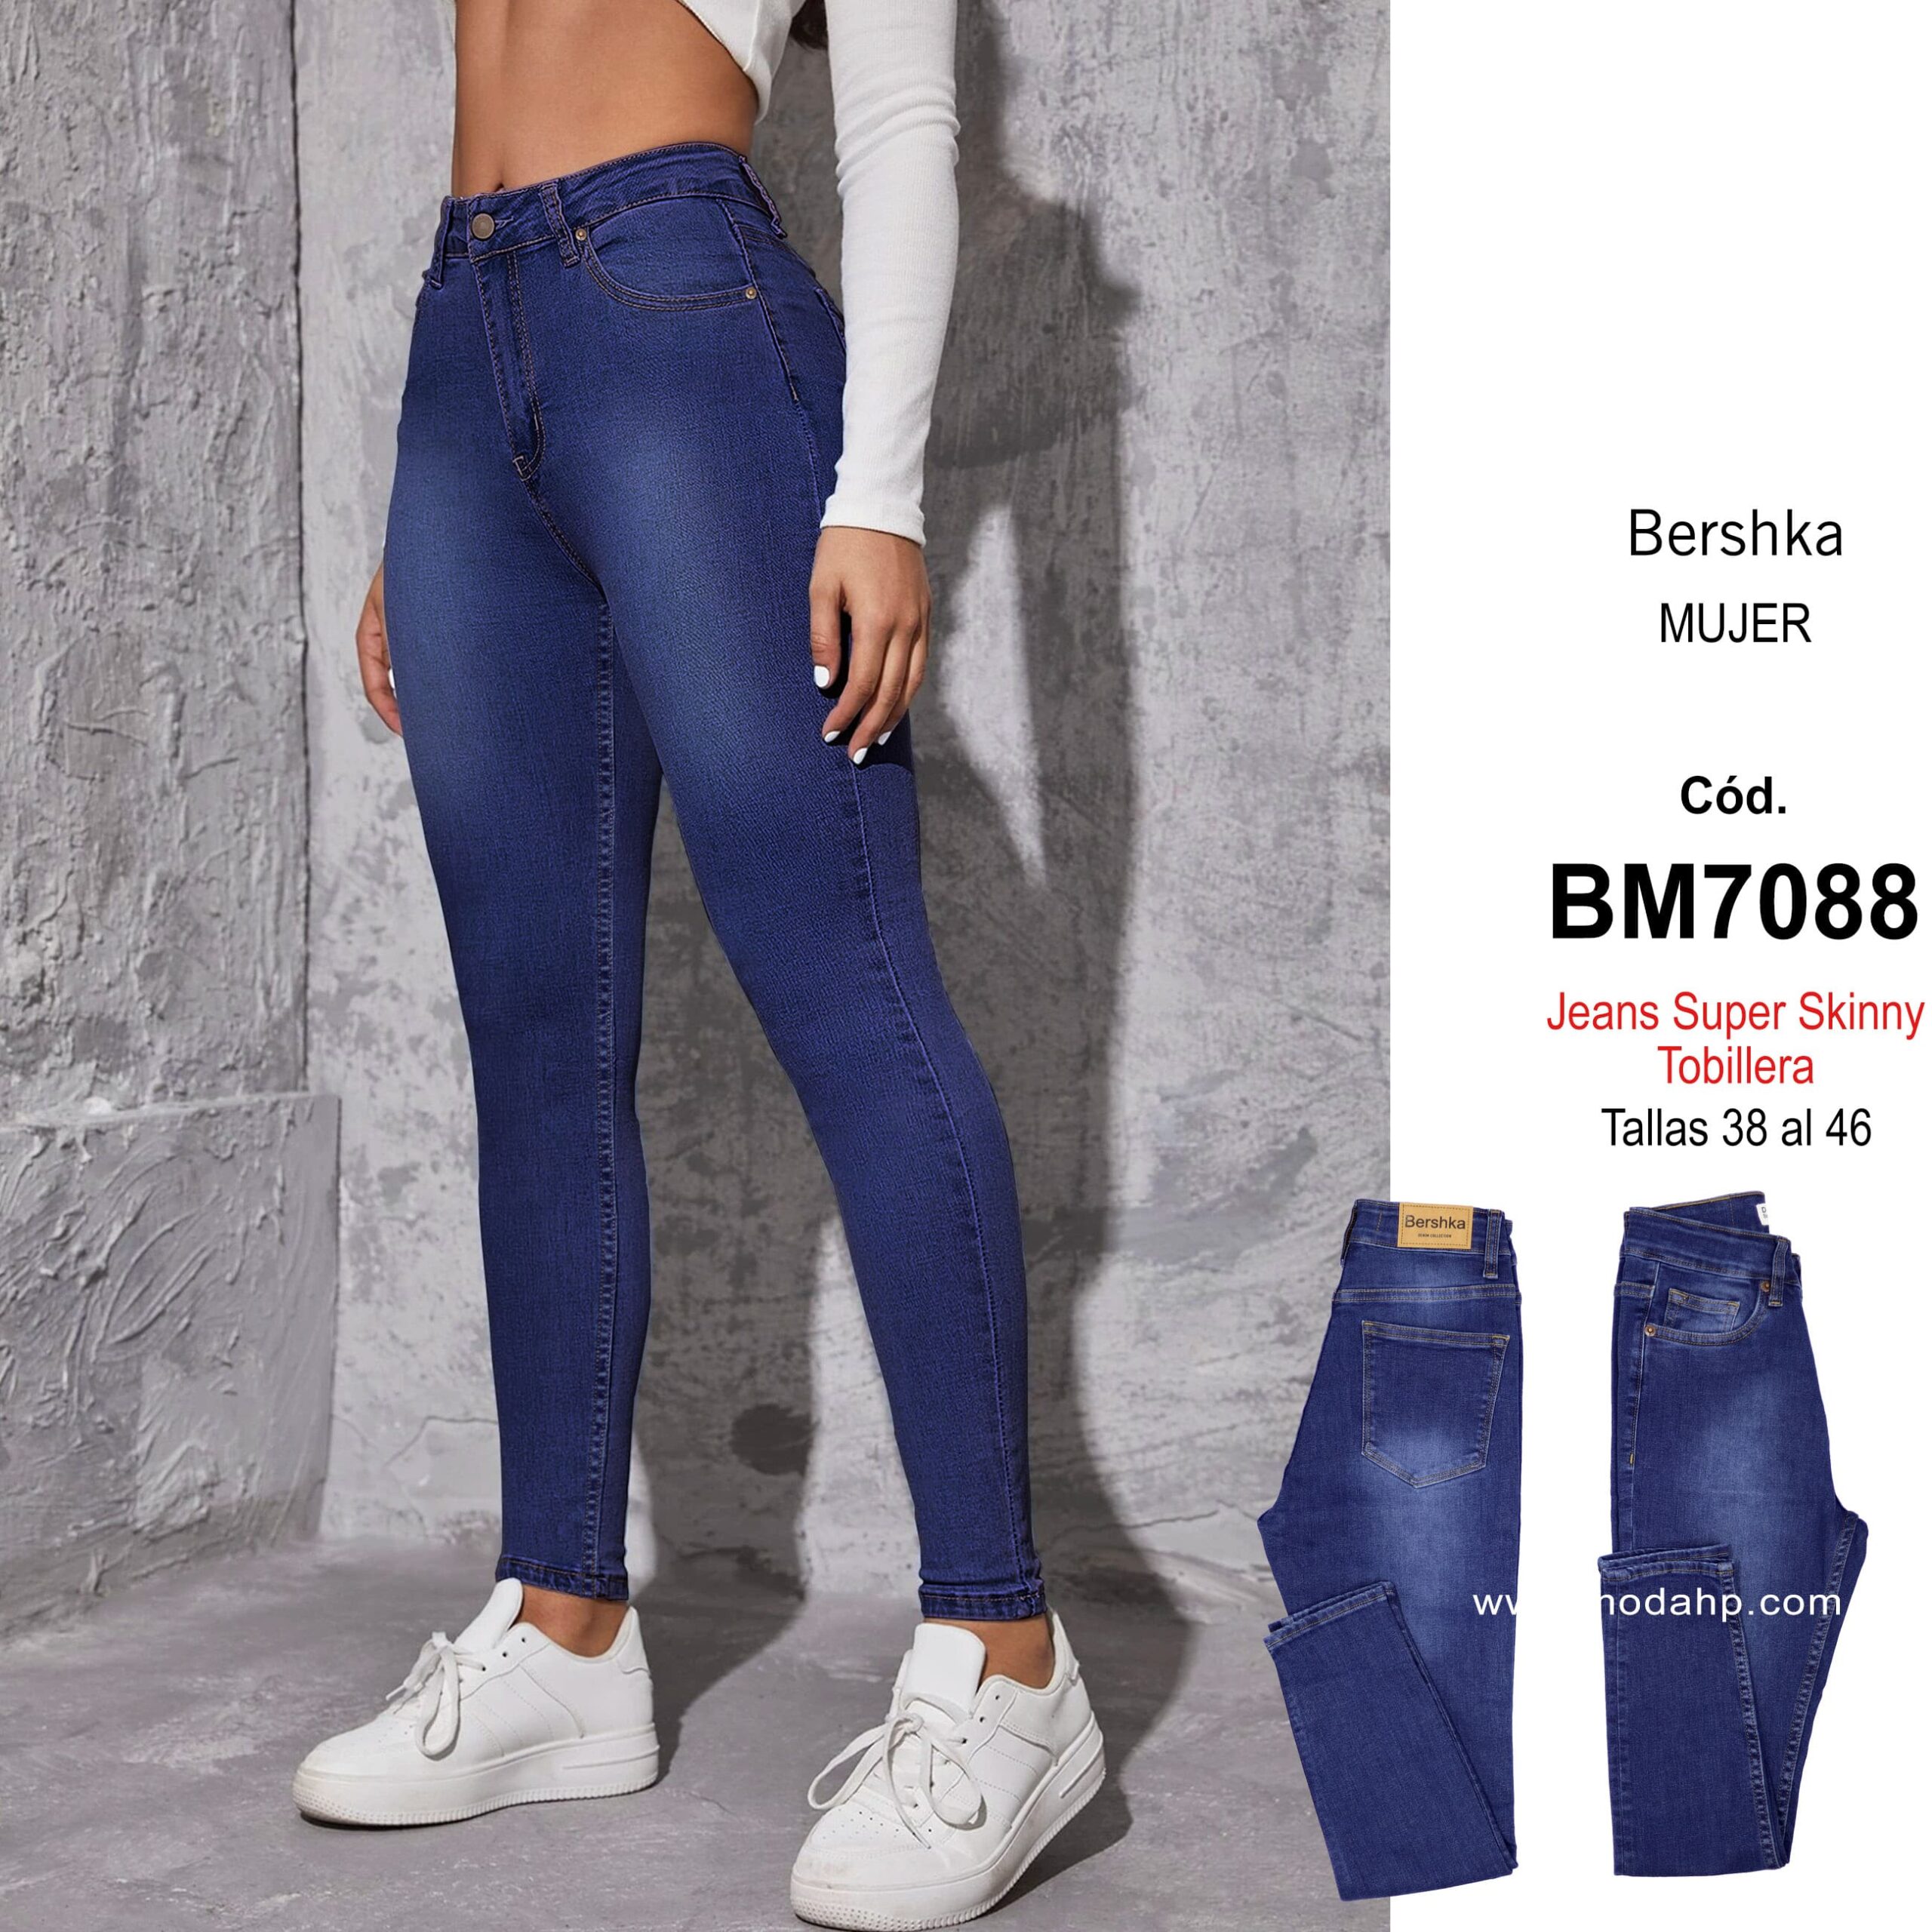 Oclusión Diverso Maquinilla de afeitar Cód. BM7088. Bershka Jeans Super Skinny – Tienda H&P Brand